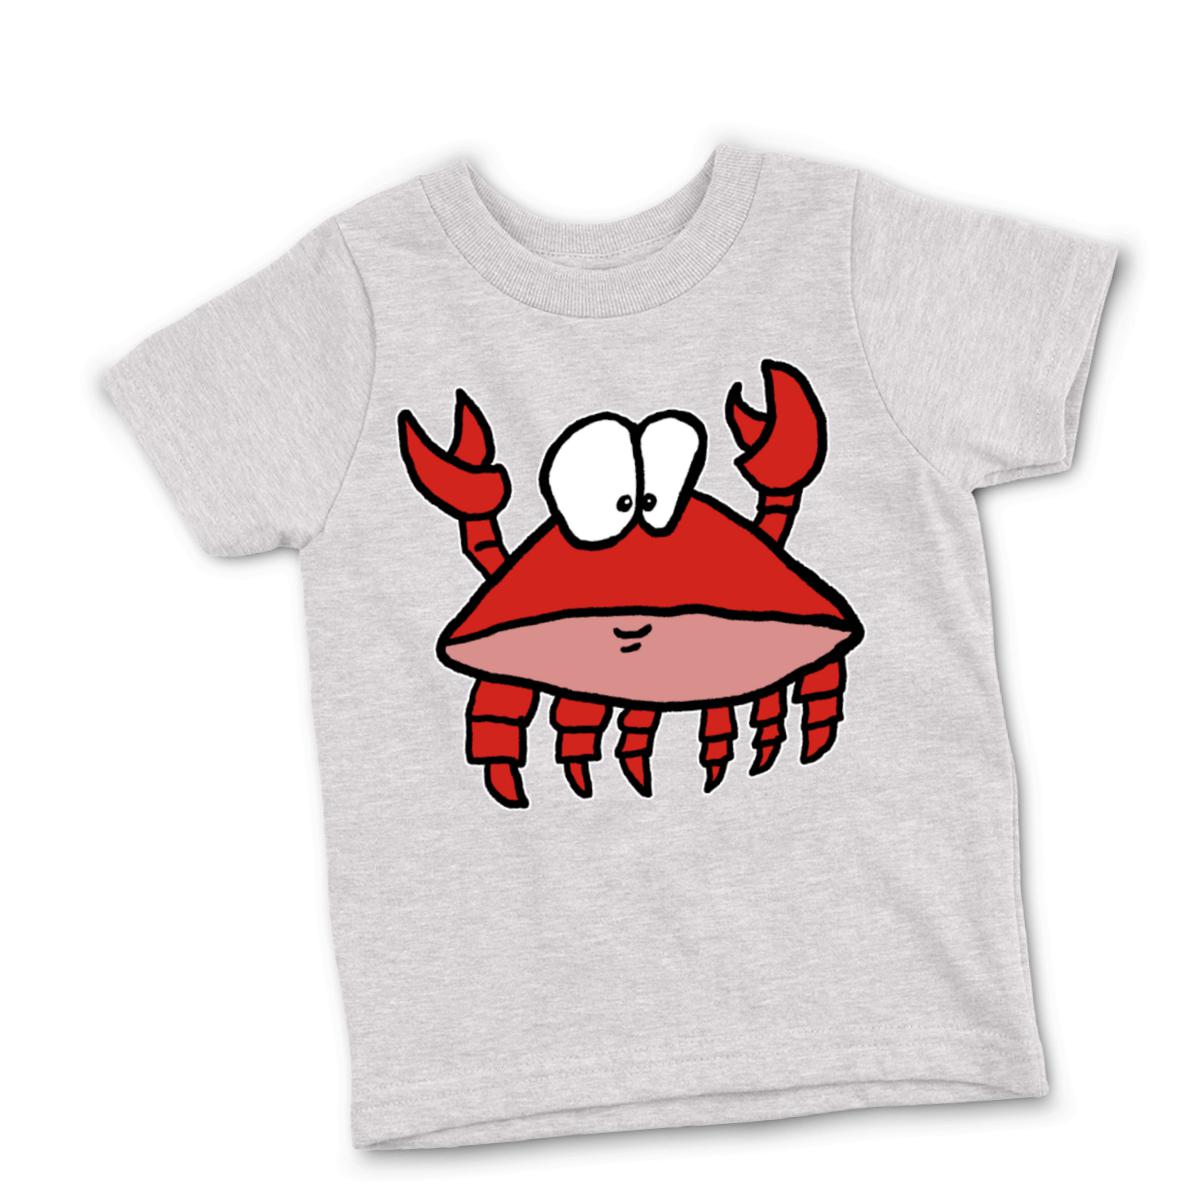 Crab 2.0 Kid's Tee Small heather